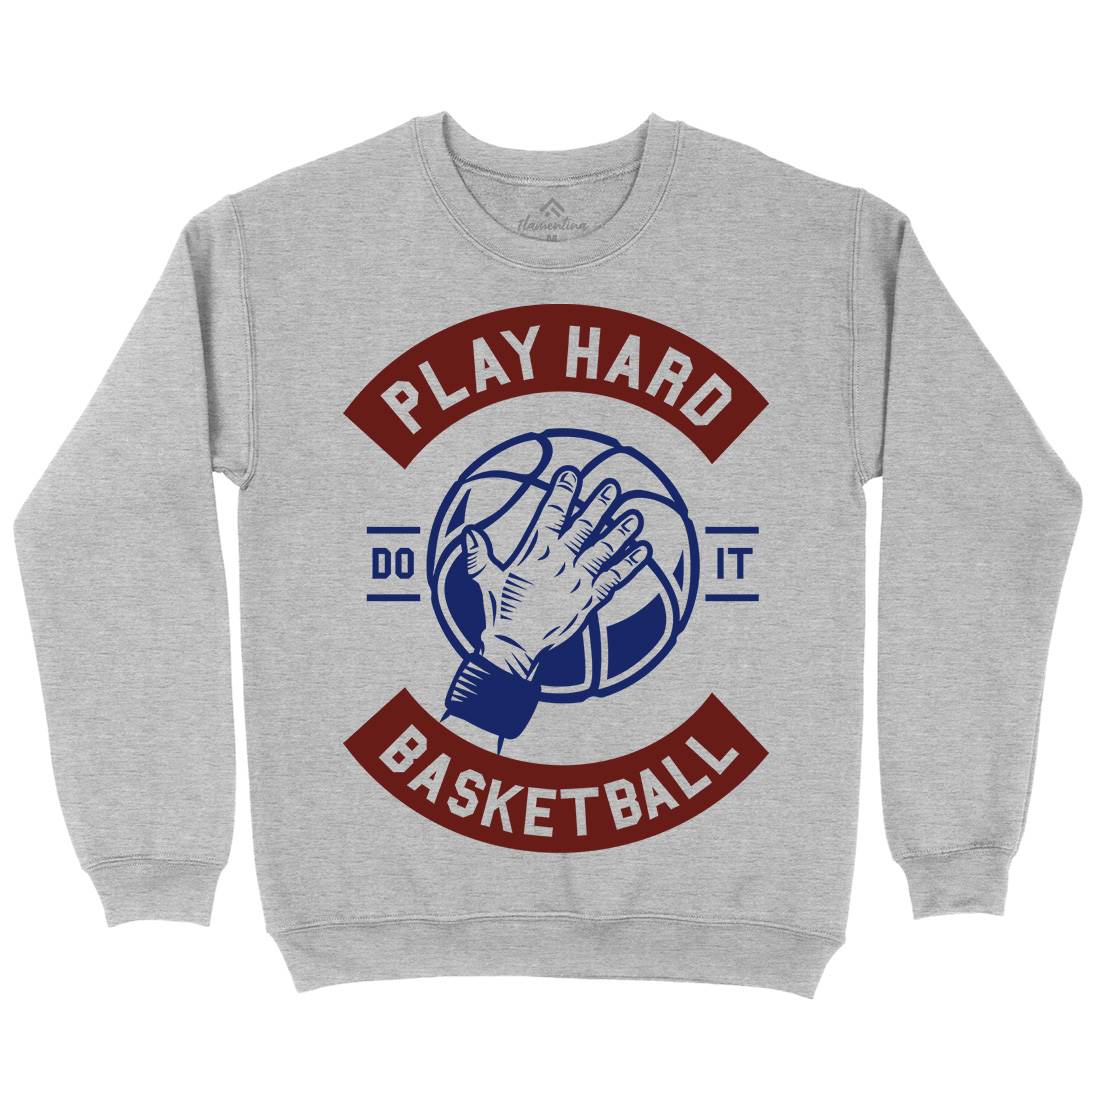 Play Hard Basketball Mens Crew Neck Sweatshirt Sport A261